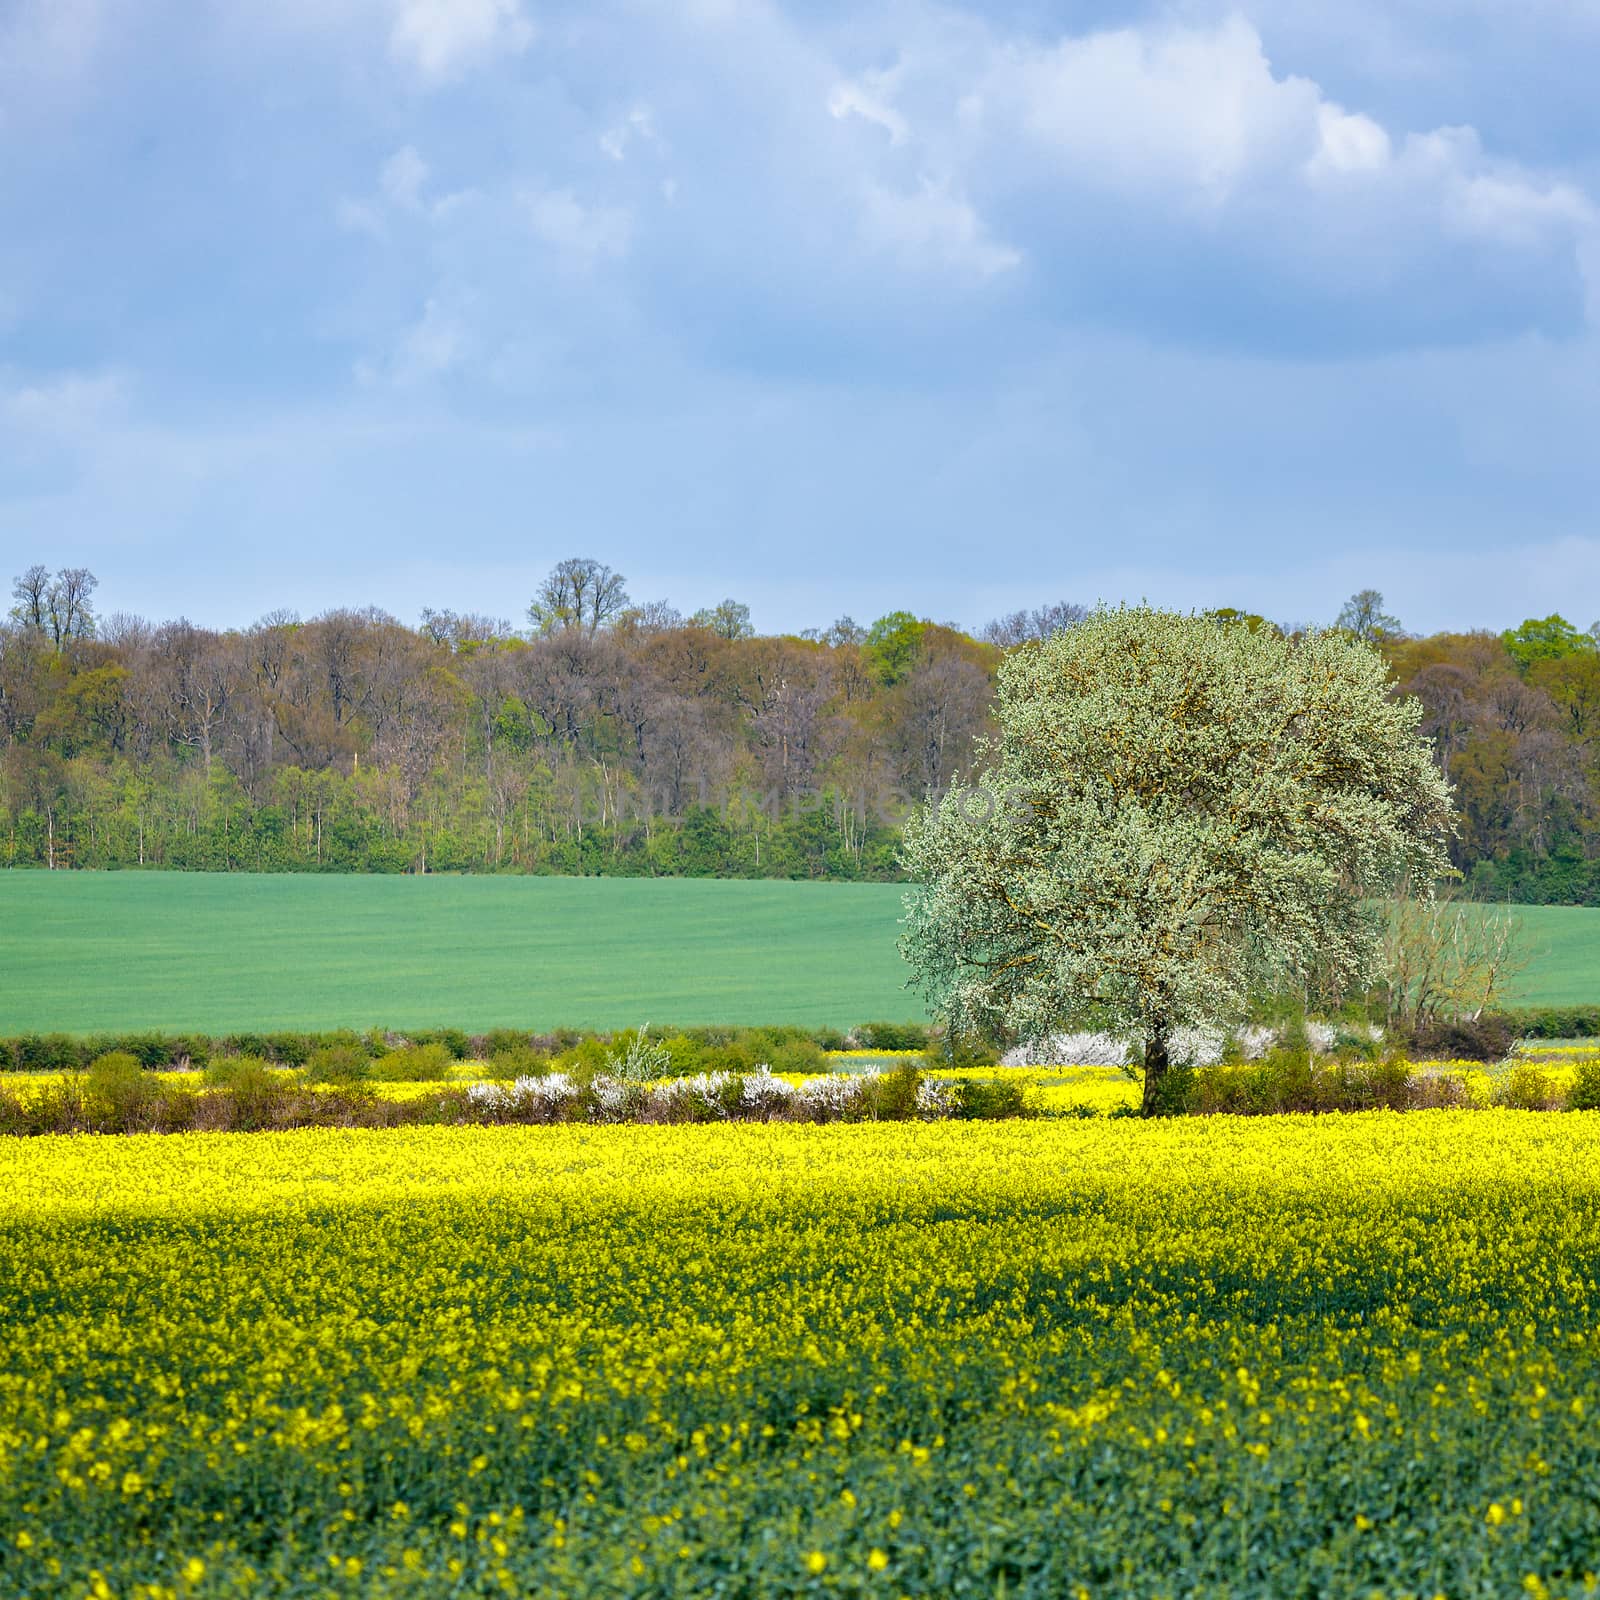 Arable Farmland in Cambridgeshire on a Sunny Spring Day